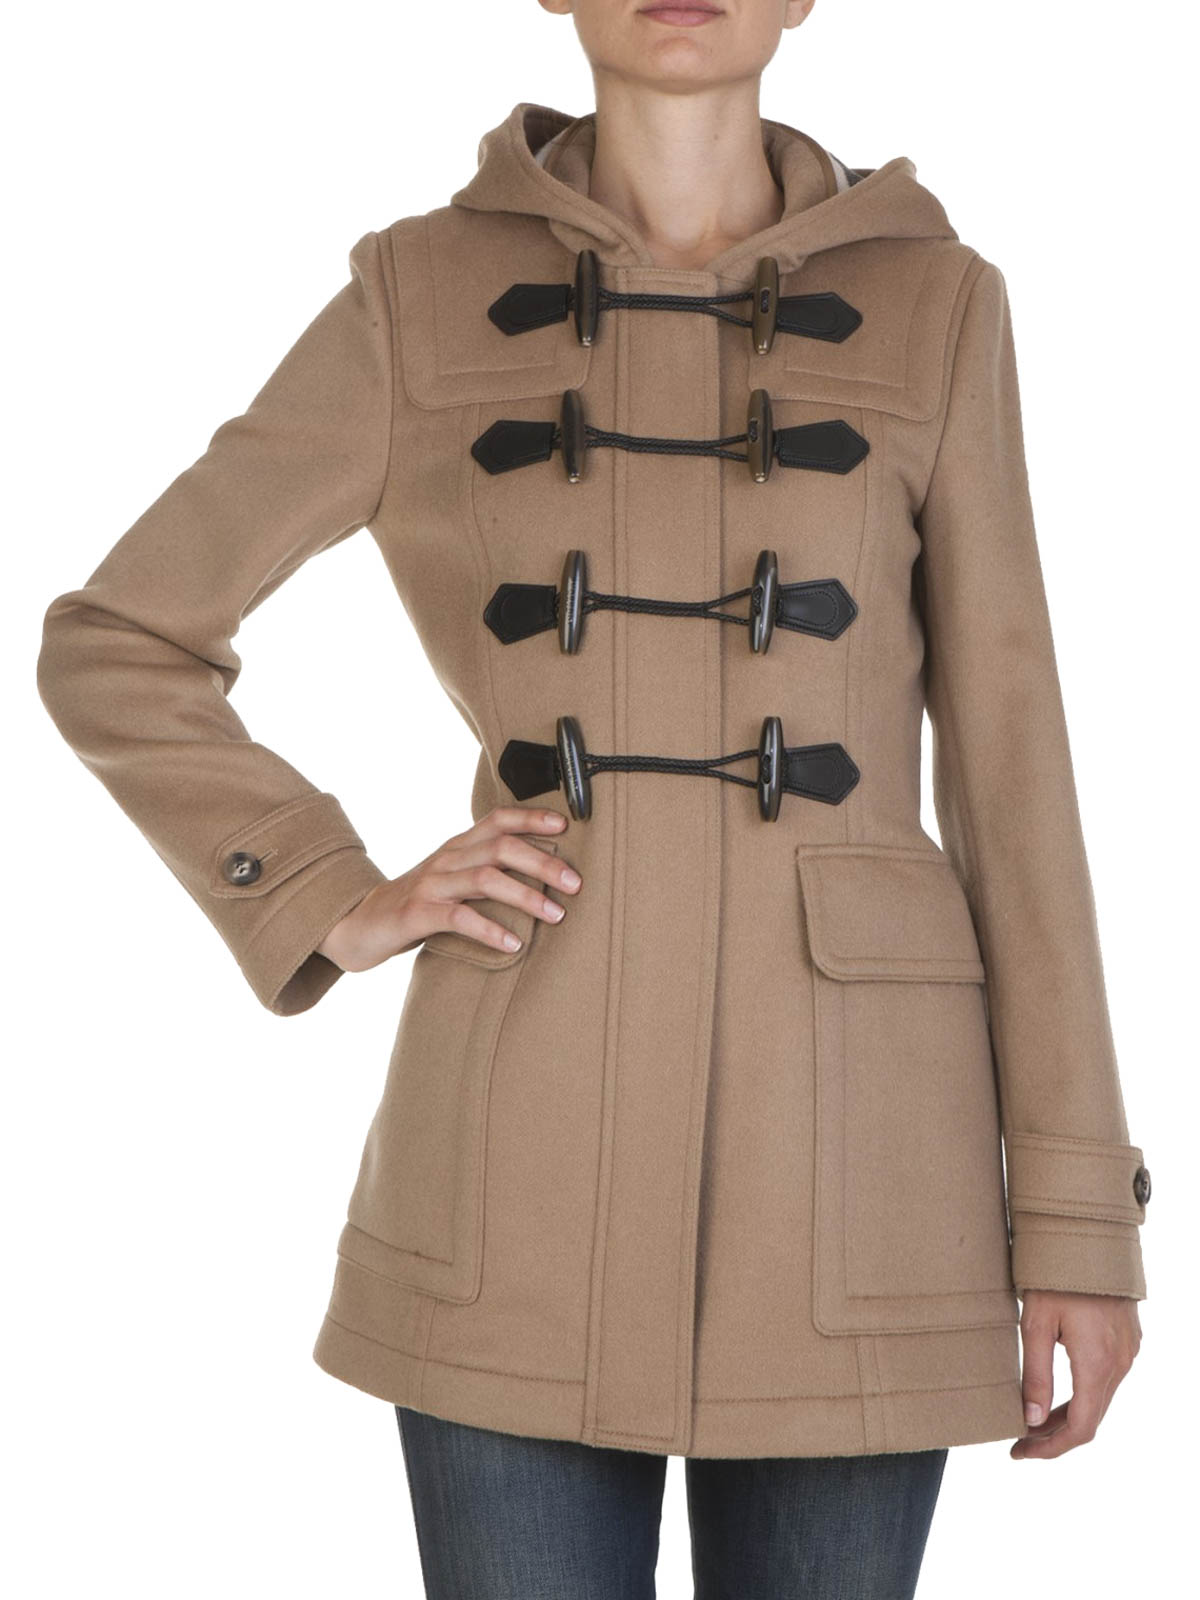 Blackwell duffle coat - trench coats 